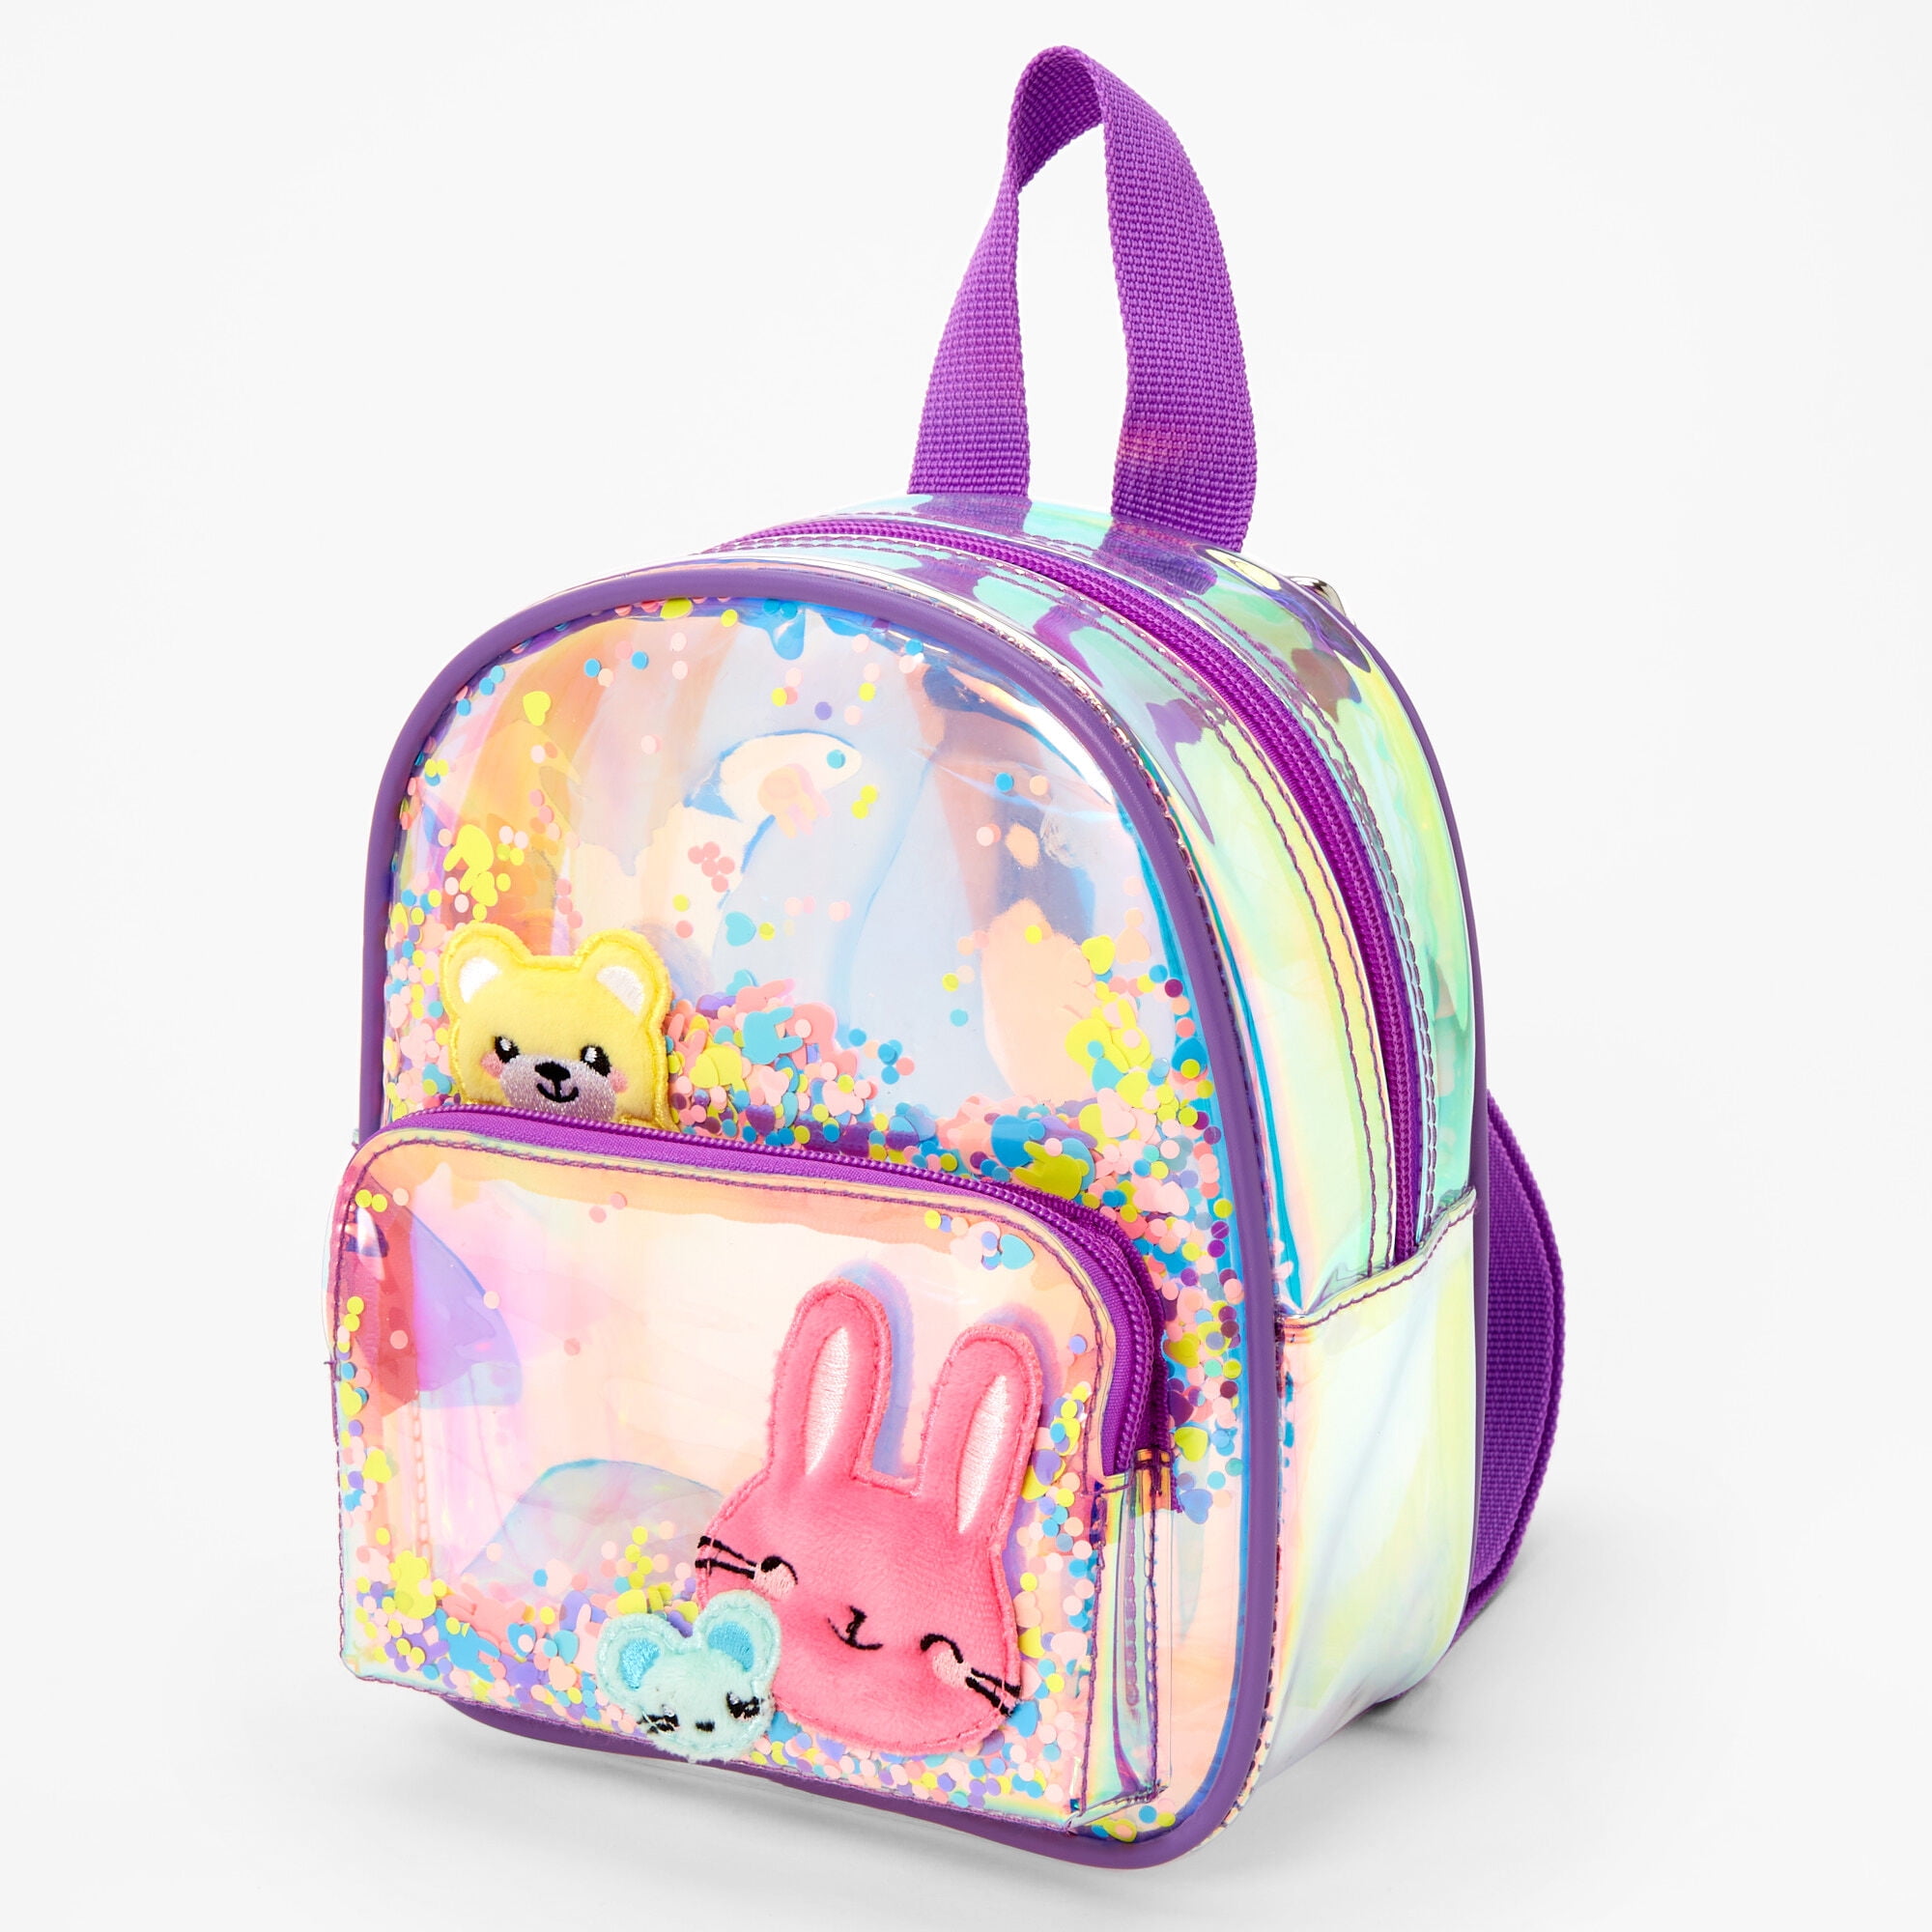 Claire s Club Mini Backpack Girls Age 3 6 Little Girl Purse Cute Fun Funky Accessory Kids Small Toddler Preschool Bookbag Purple Confetti Animal Pals b0be0709 5127 4b31 ae6a 975763511e9e.067deadb5a1e426f172cc8bfe6b18644